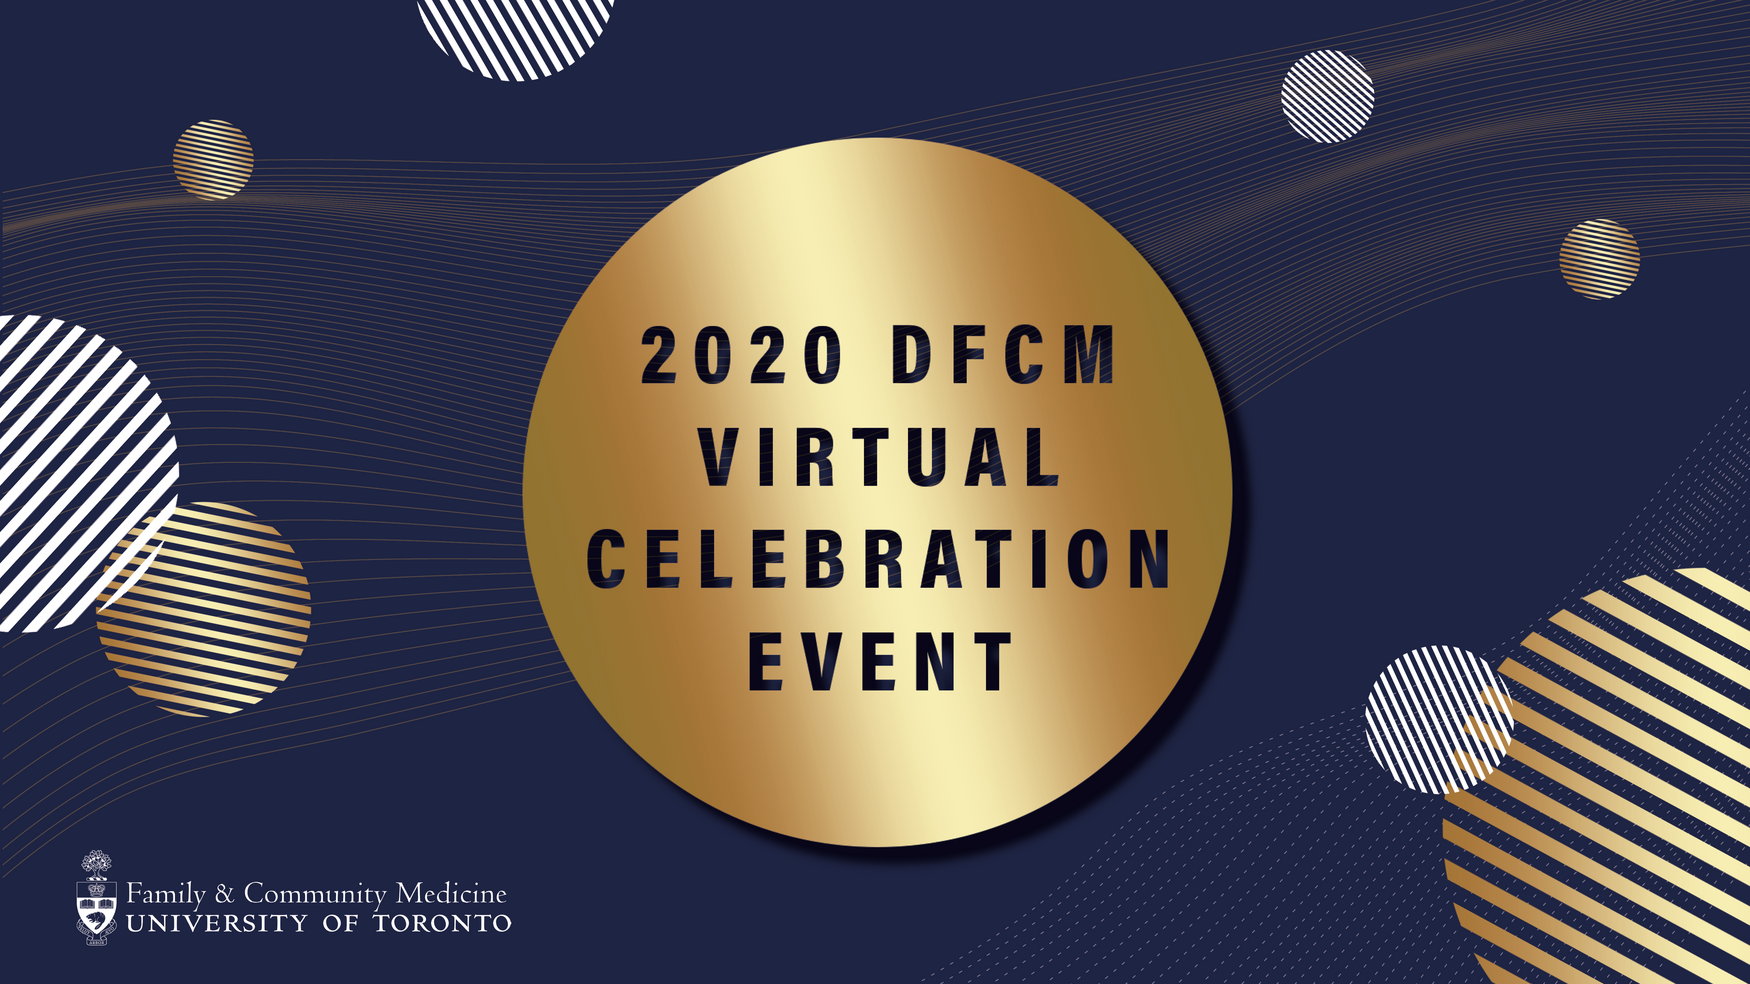 2020 DFCM Virtual Celebration Event promo image